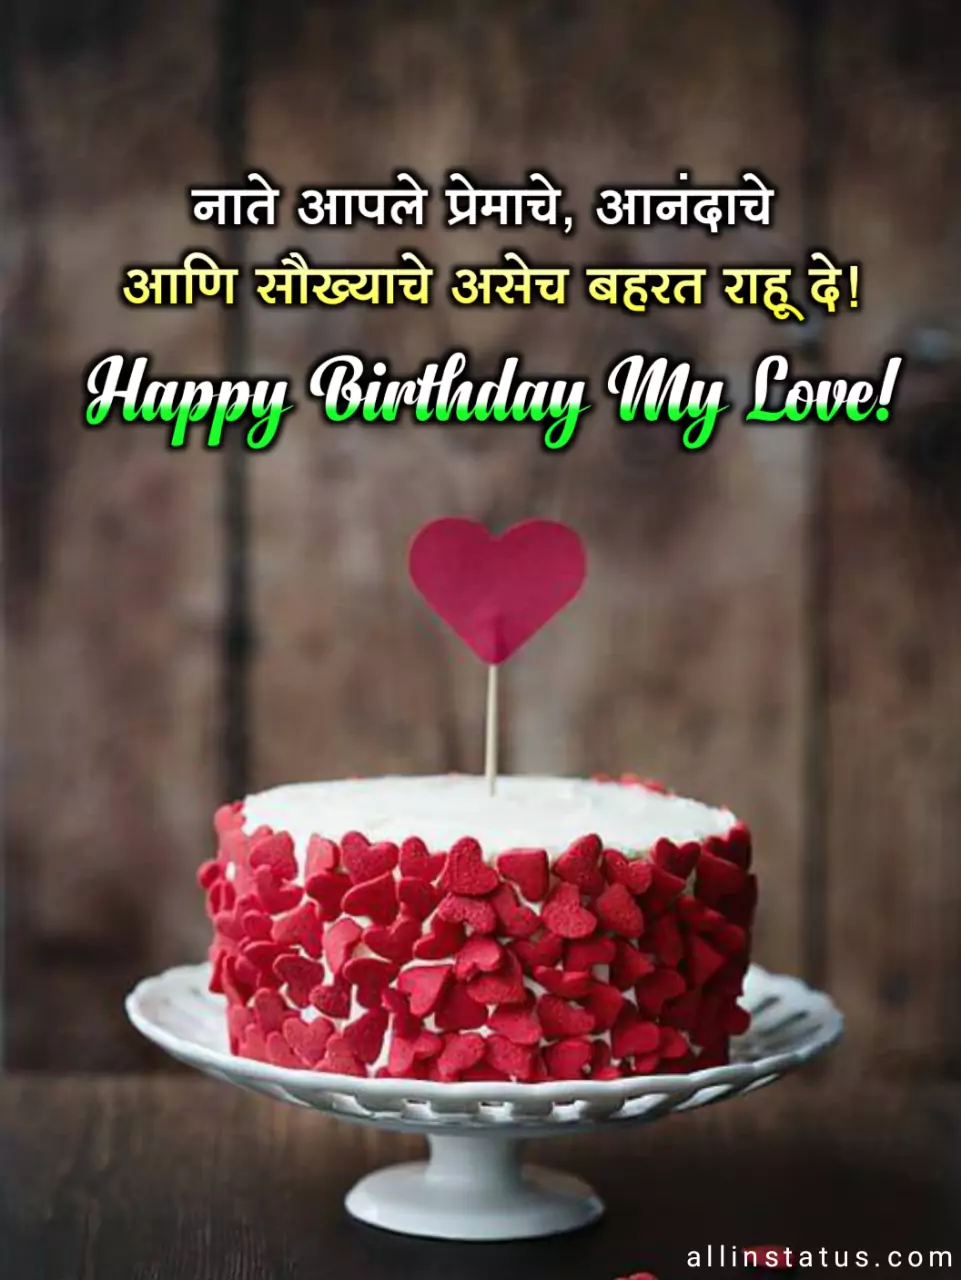 Happy Birthday Image for boyfriend in marathi